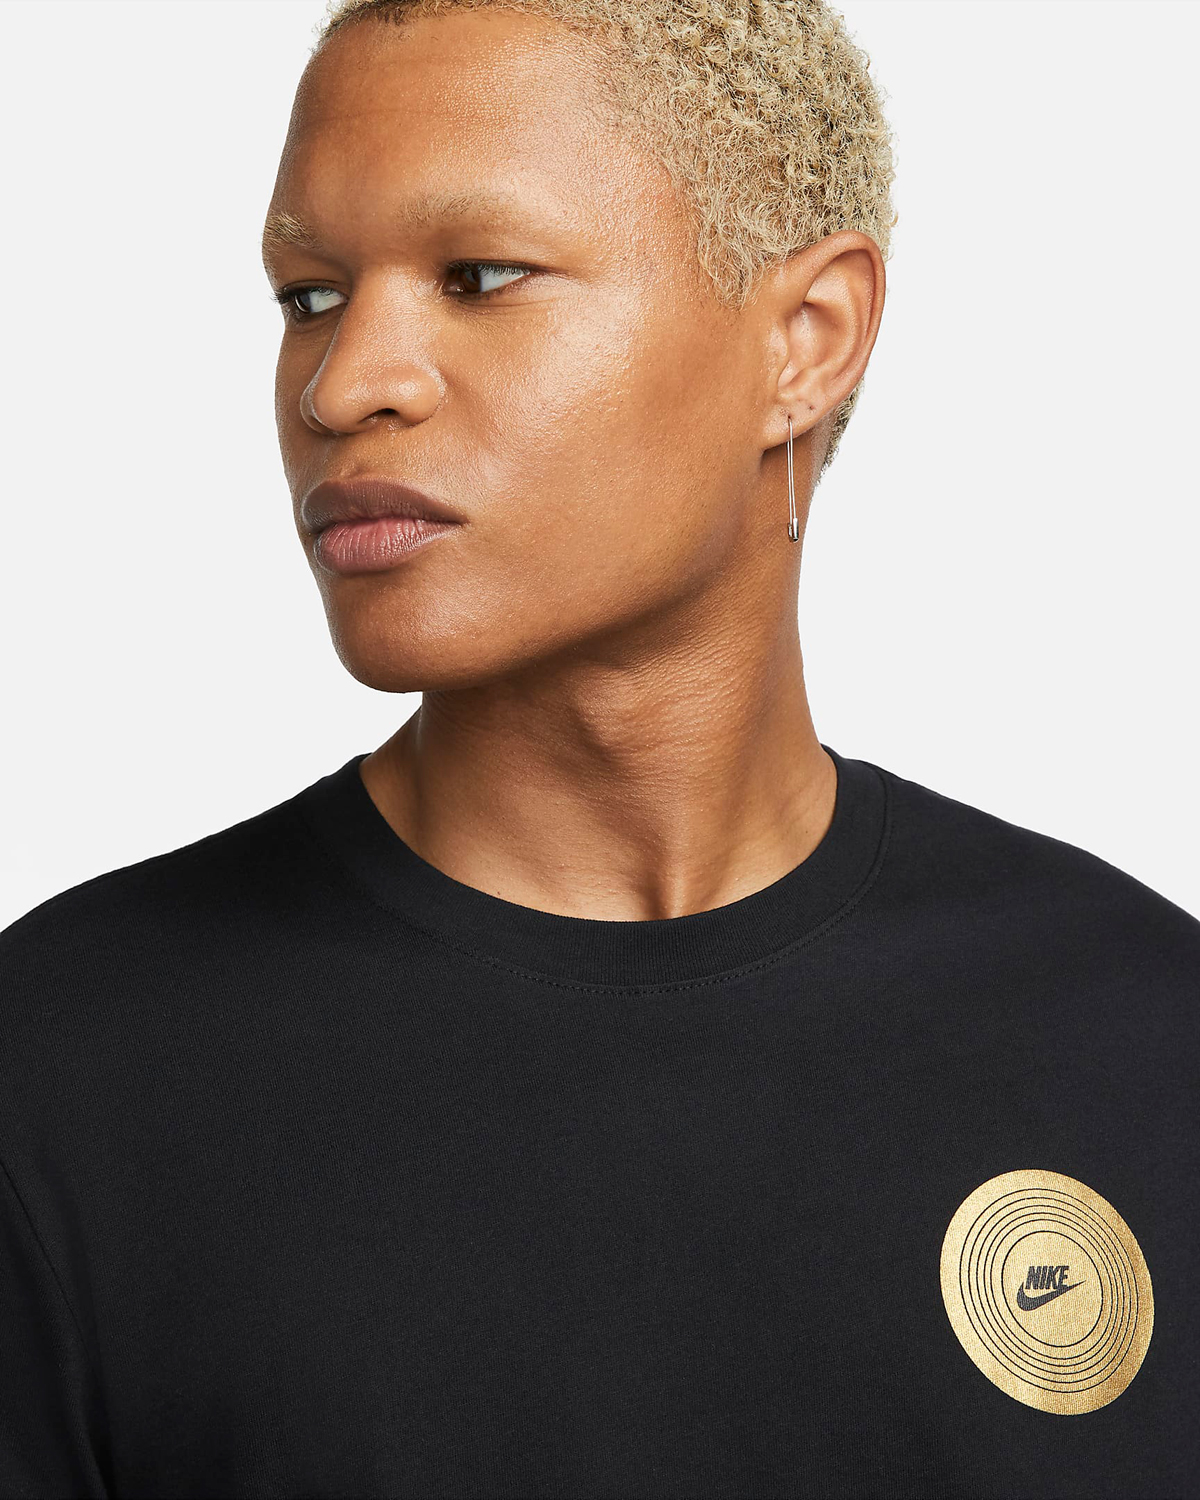 Nike-Sportswear-Hip-Hop-50th-Anniversary-T-Shirt-Black-Gold-3